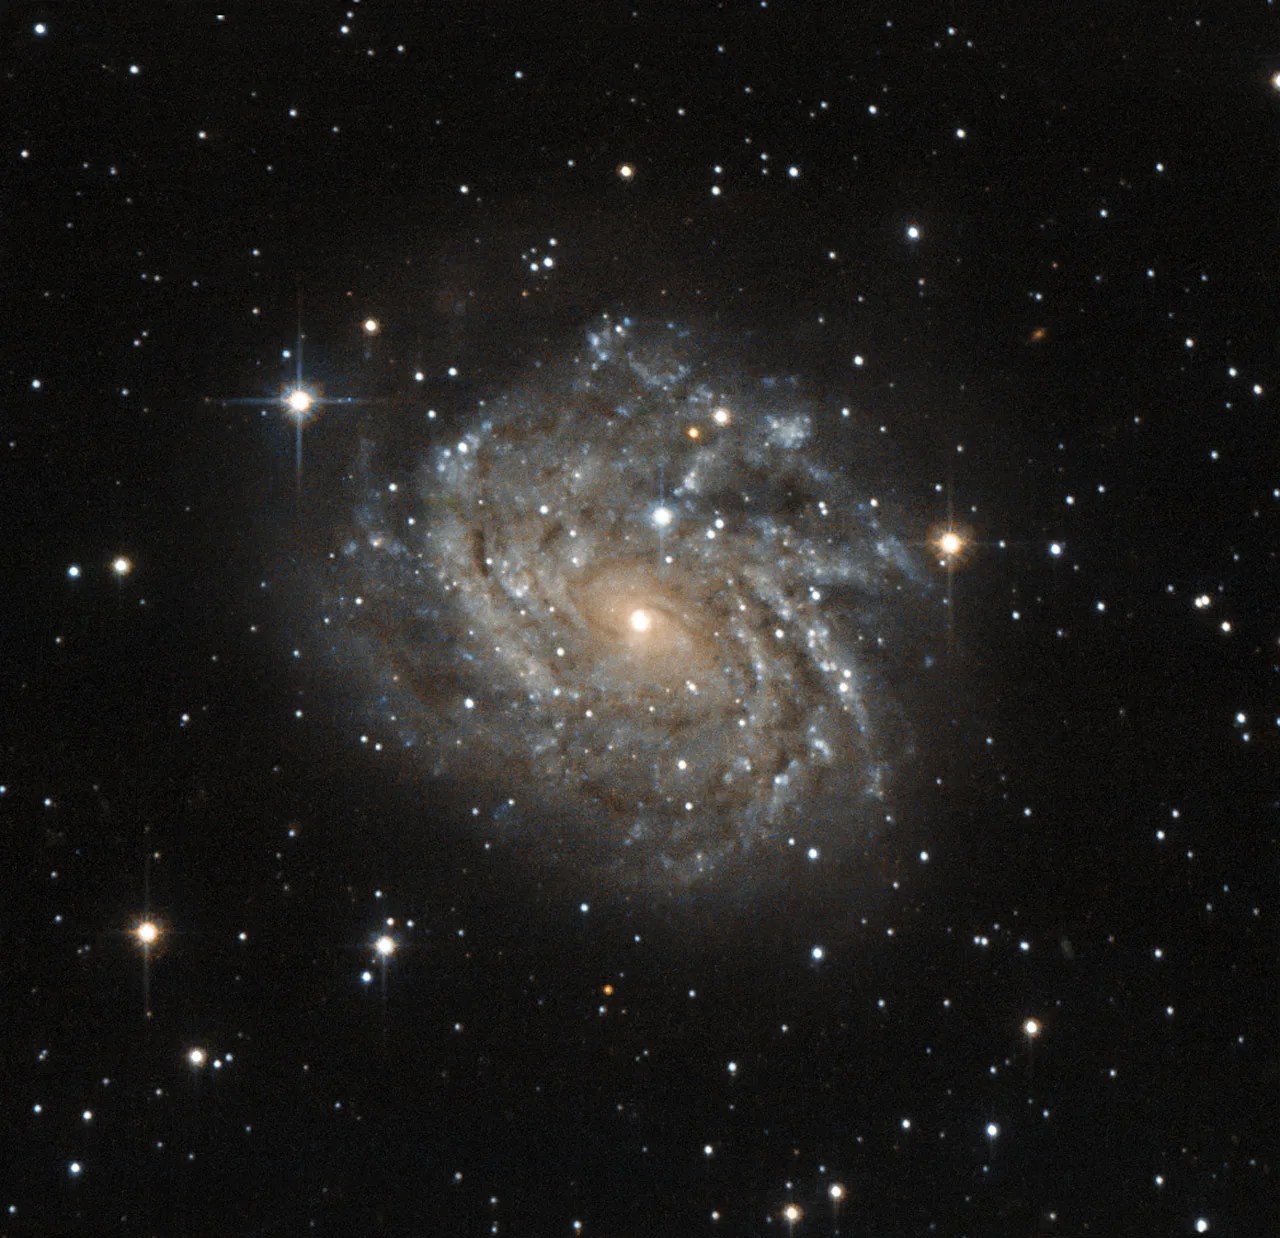 A classic spiral galaxy